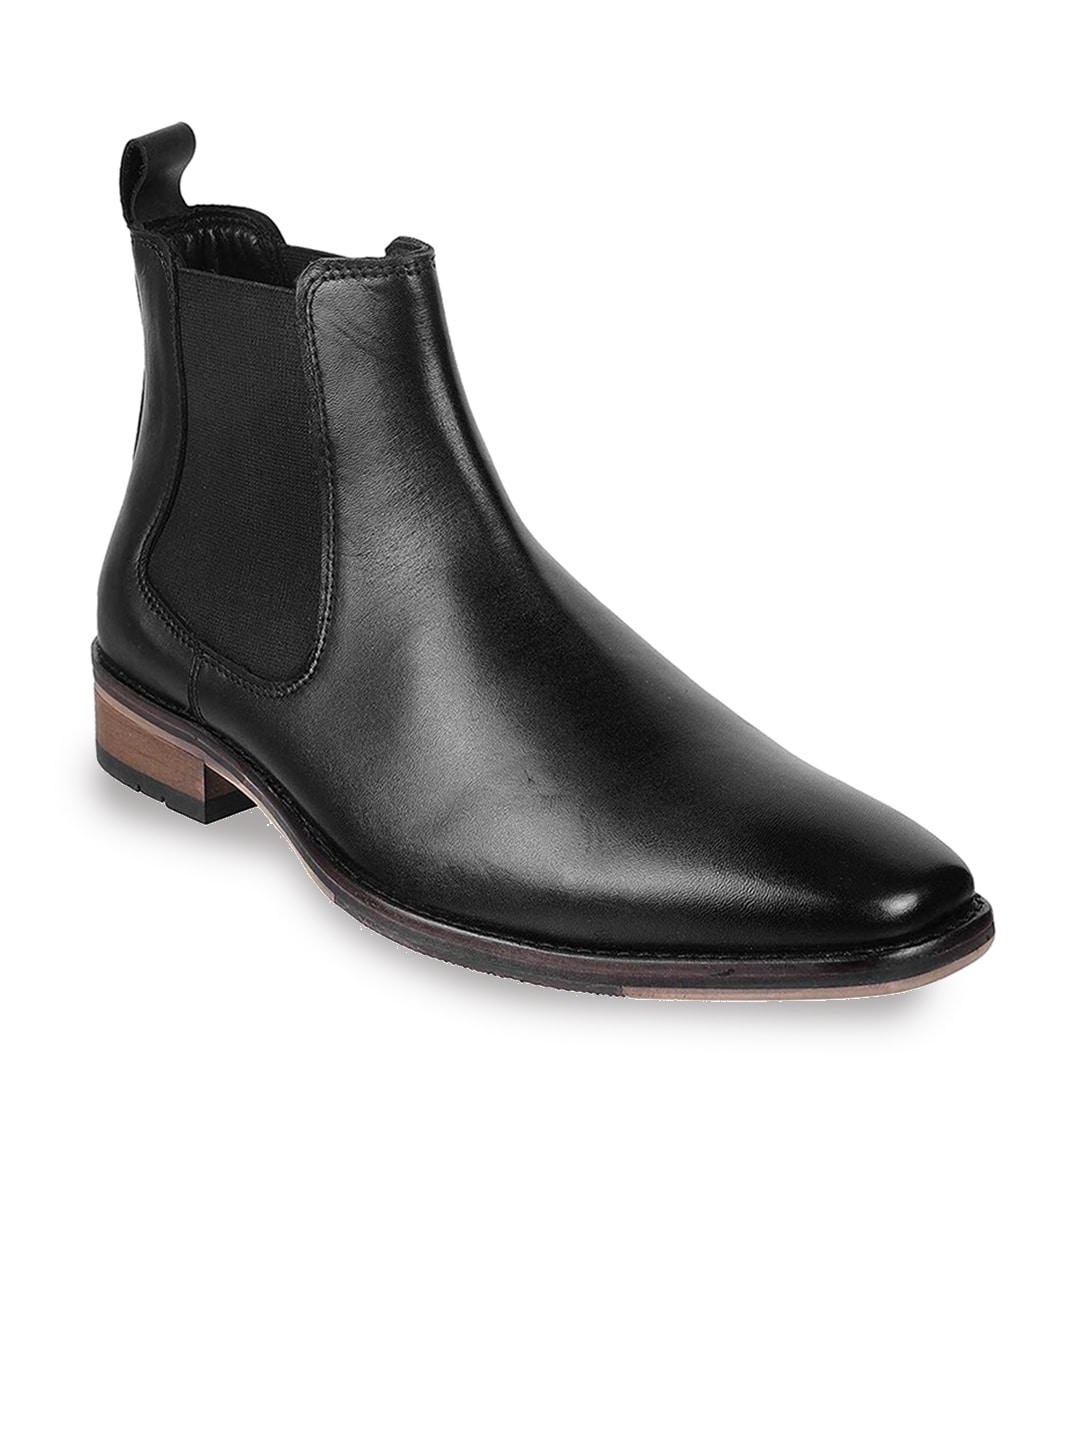 DAVINCHI Men Leather High-Top Chelsea Boots